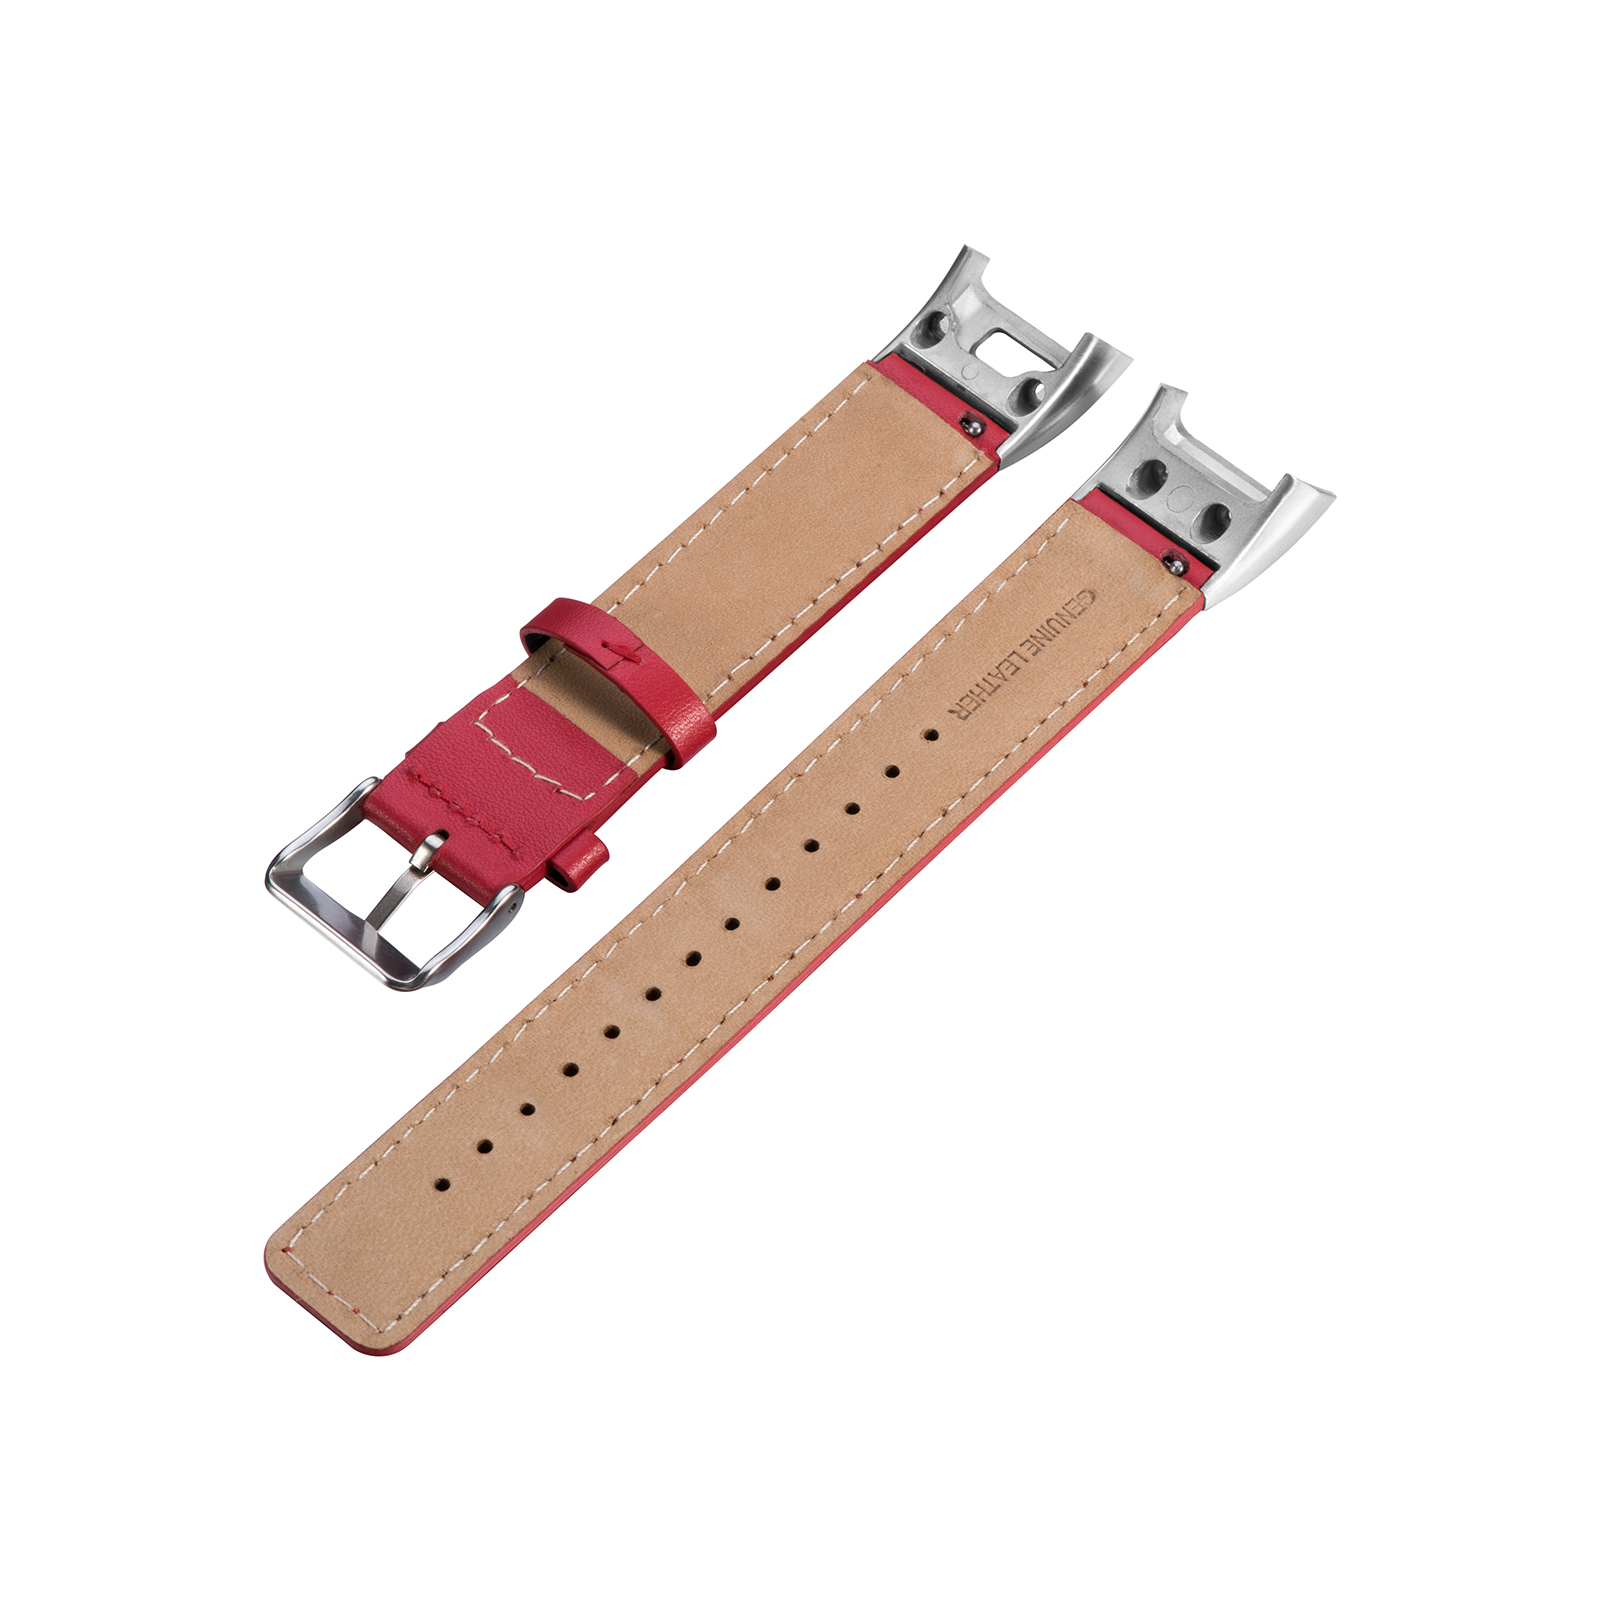 Bakeey-Retro-Metal-Buckle-Leather-Strap-Smart-Watch-Band-For-Garmin-Vivosmart-HR-1739351-7